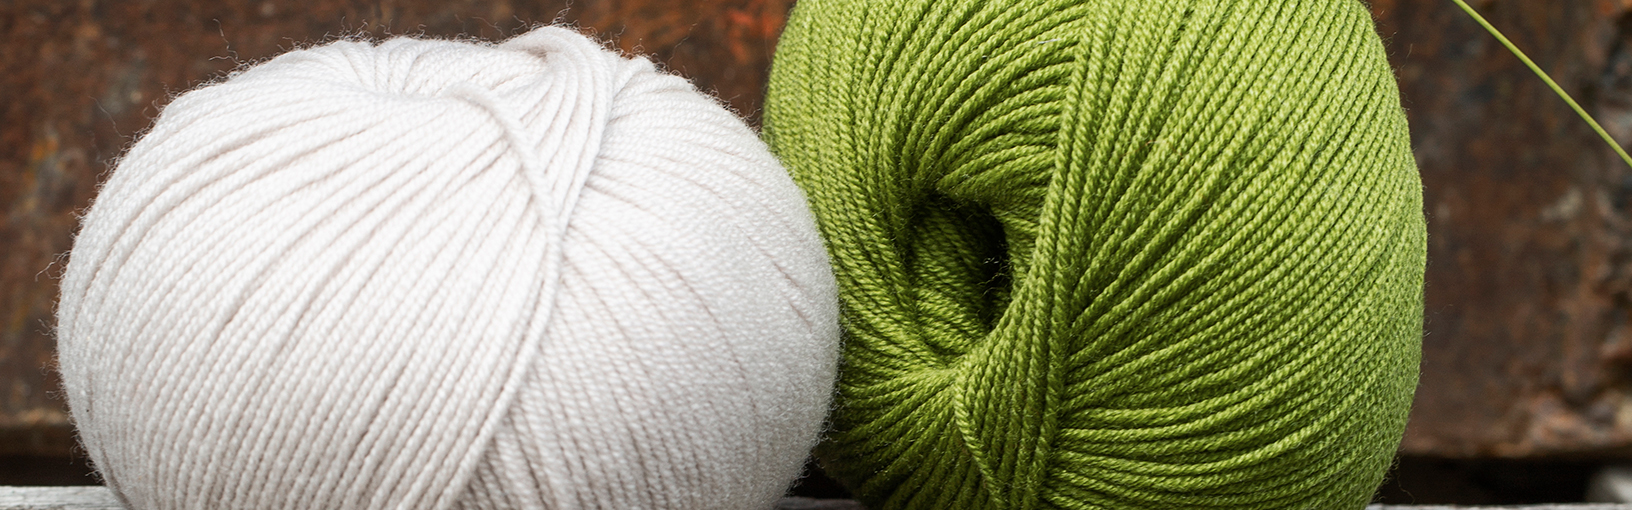 High quality yarns for knitting, crocheting & felting Lana Grossa Yarns | Country style yarn